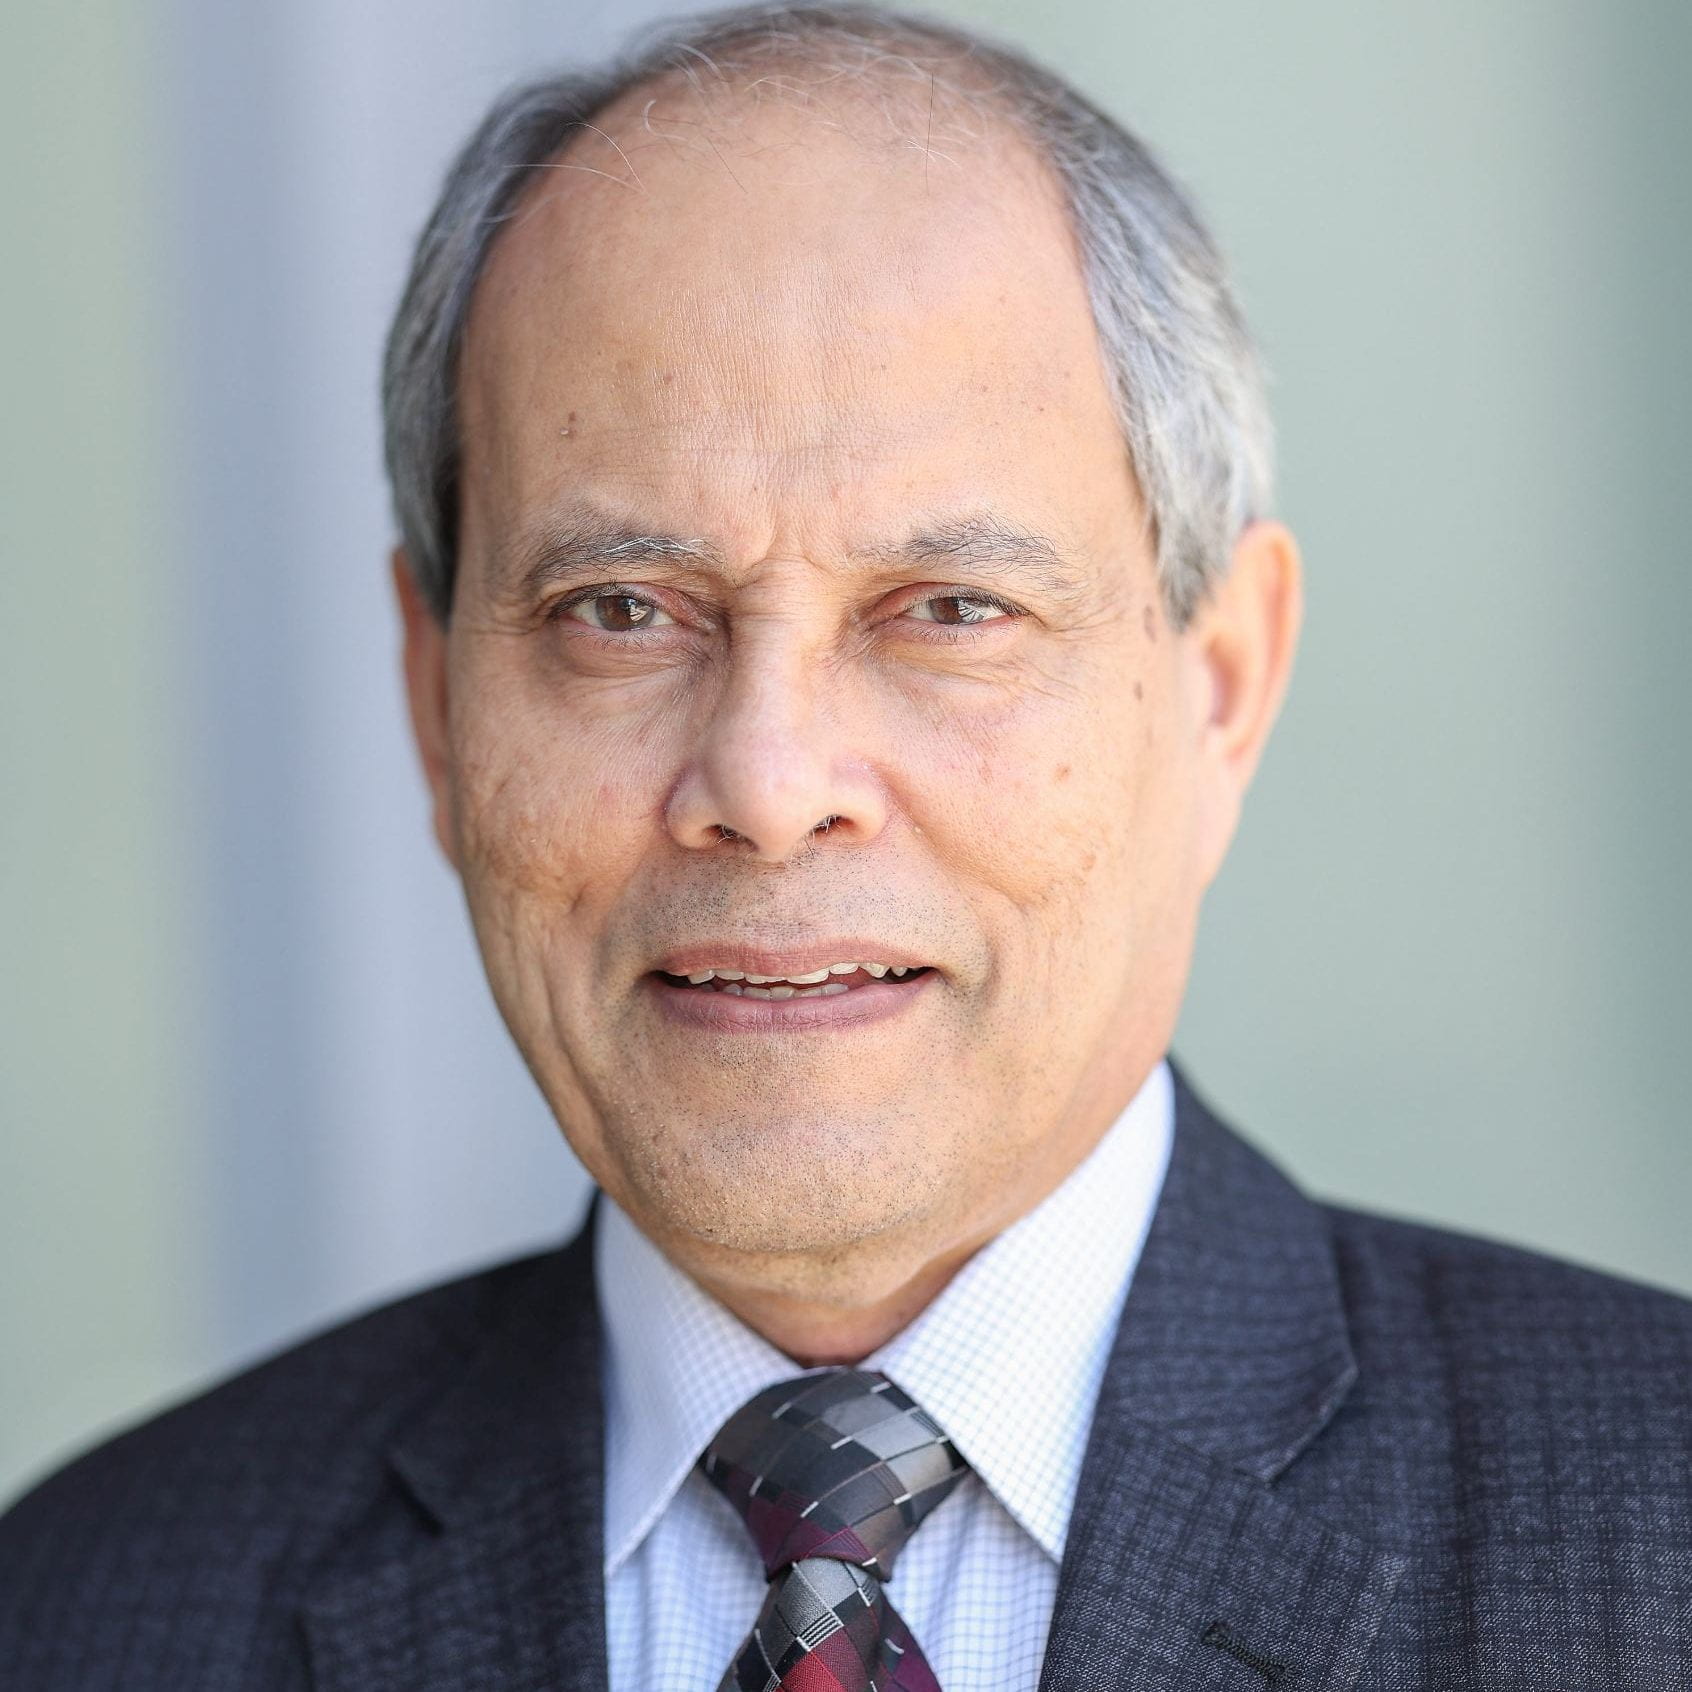 Saifur Rahman
IEEE President
Director of Virginia Tech Advanced Research Institute, USA